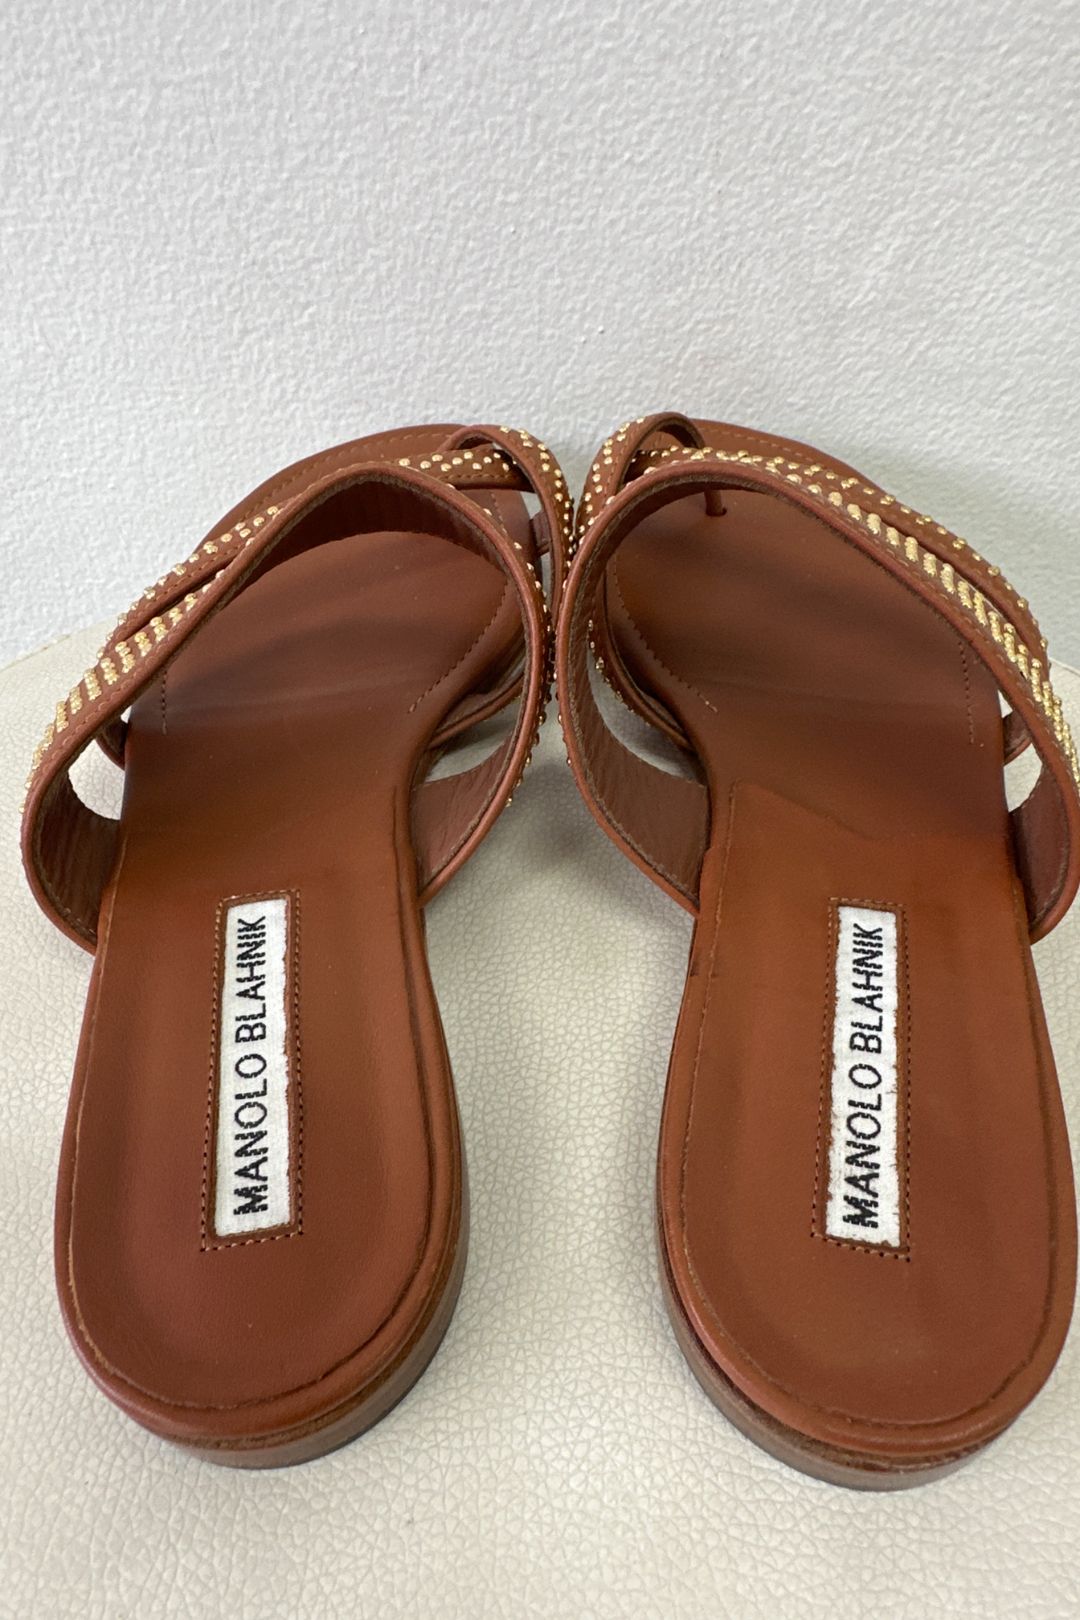 Manolo Blahnik Flat Strappy Sandals in Brown